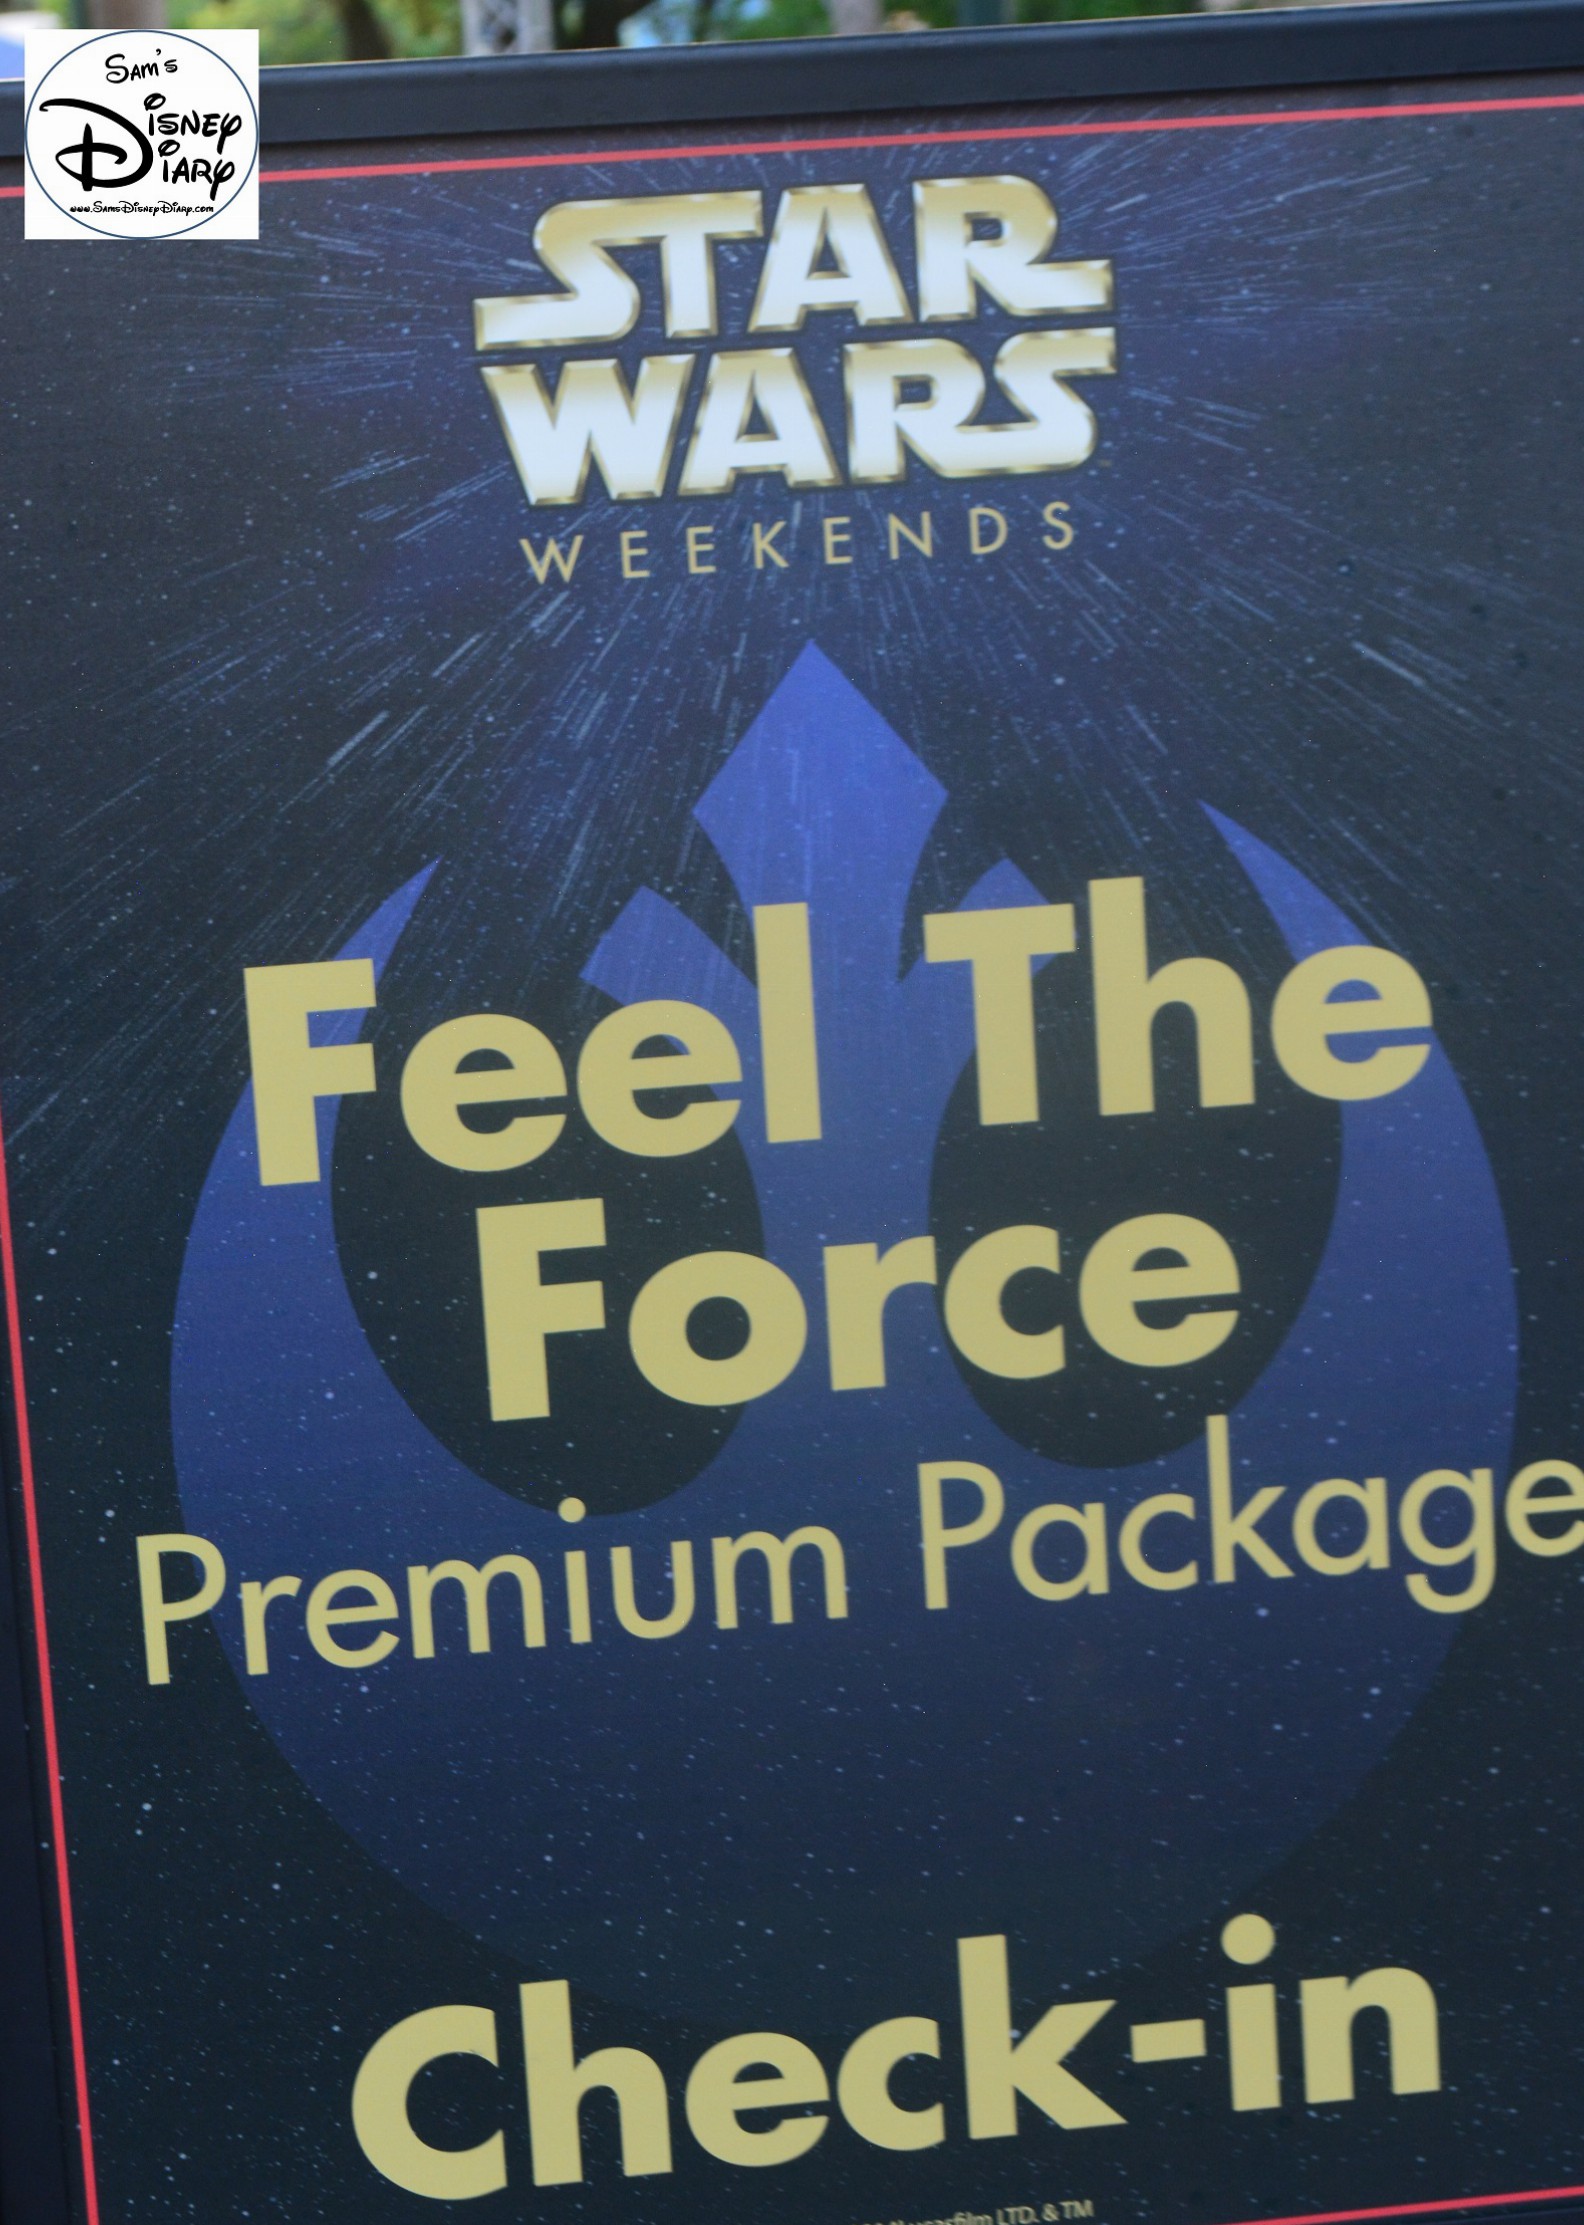 Star Wars Weekend "Fell The Force" Premium Package